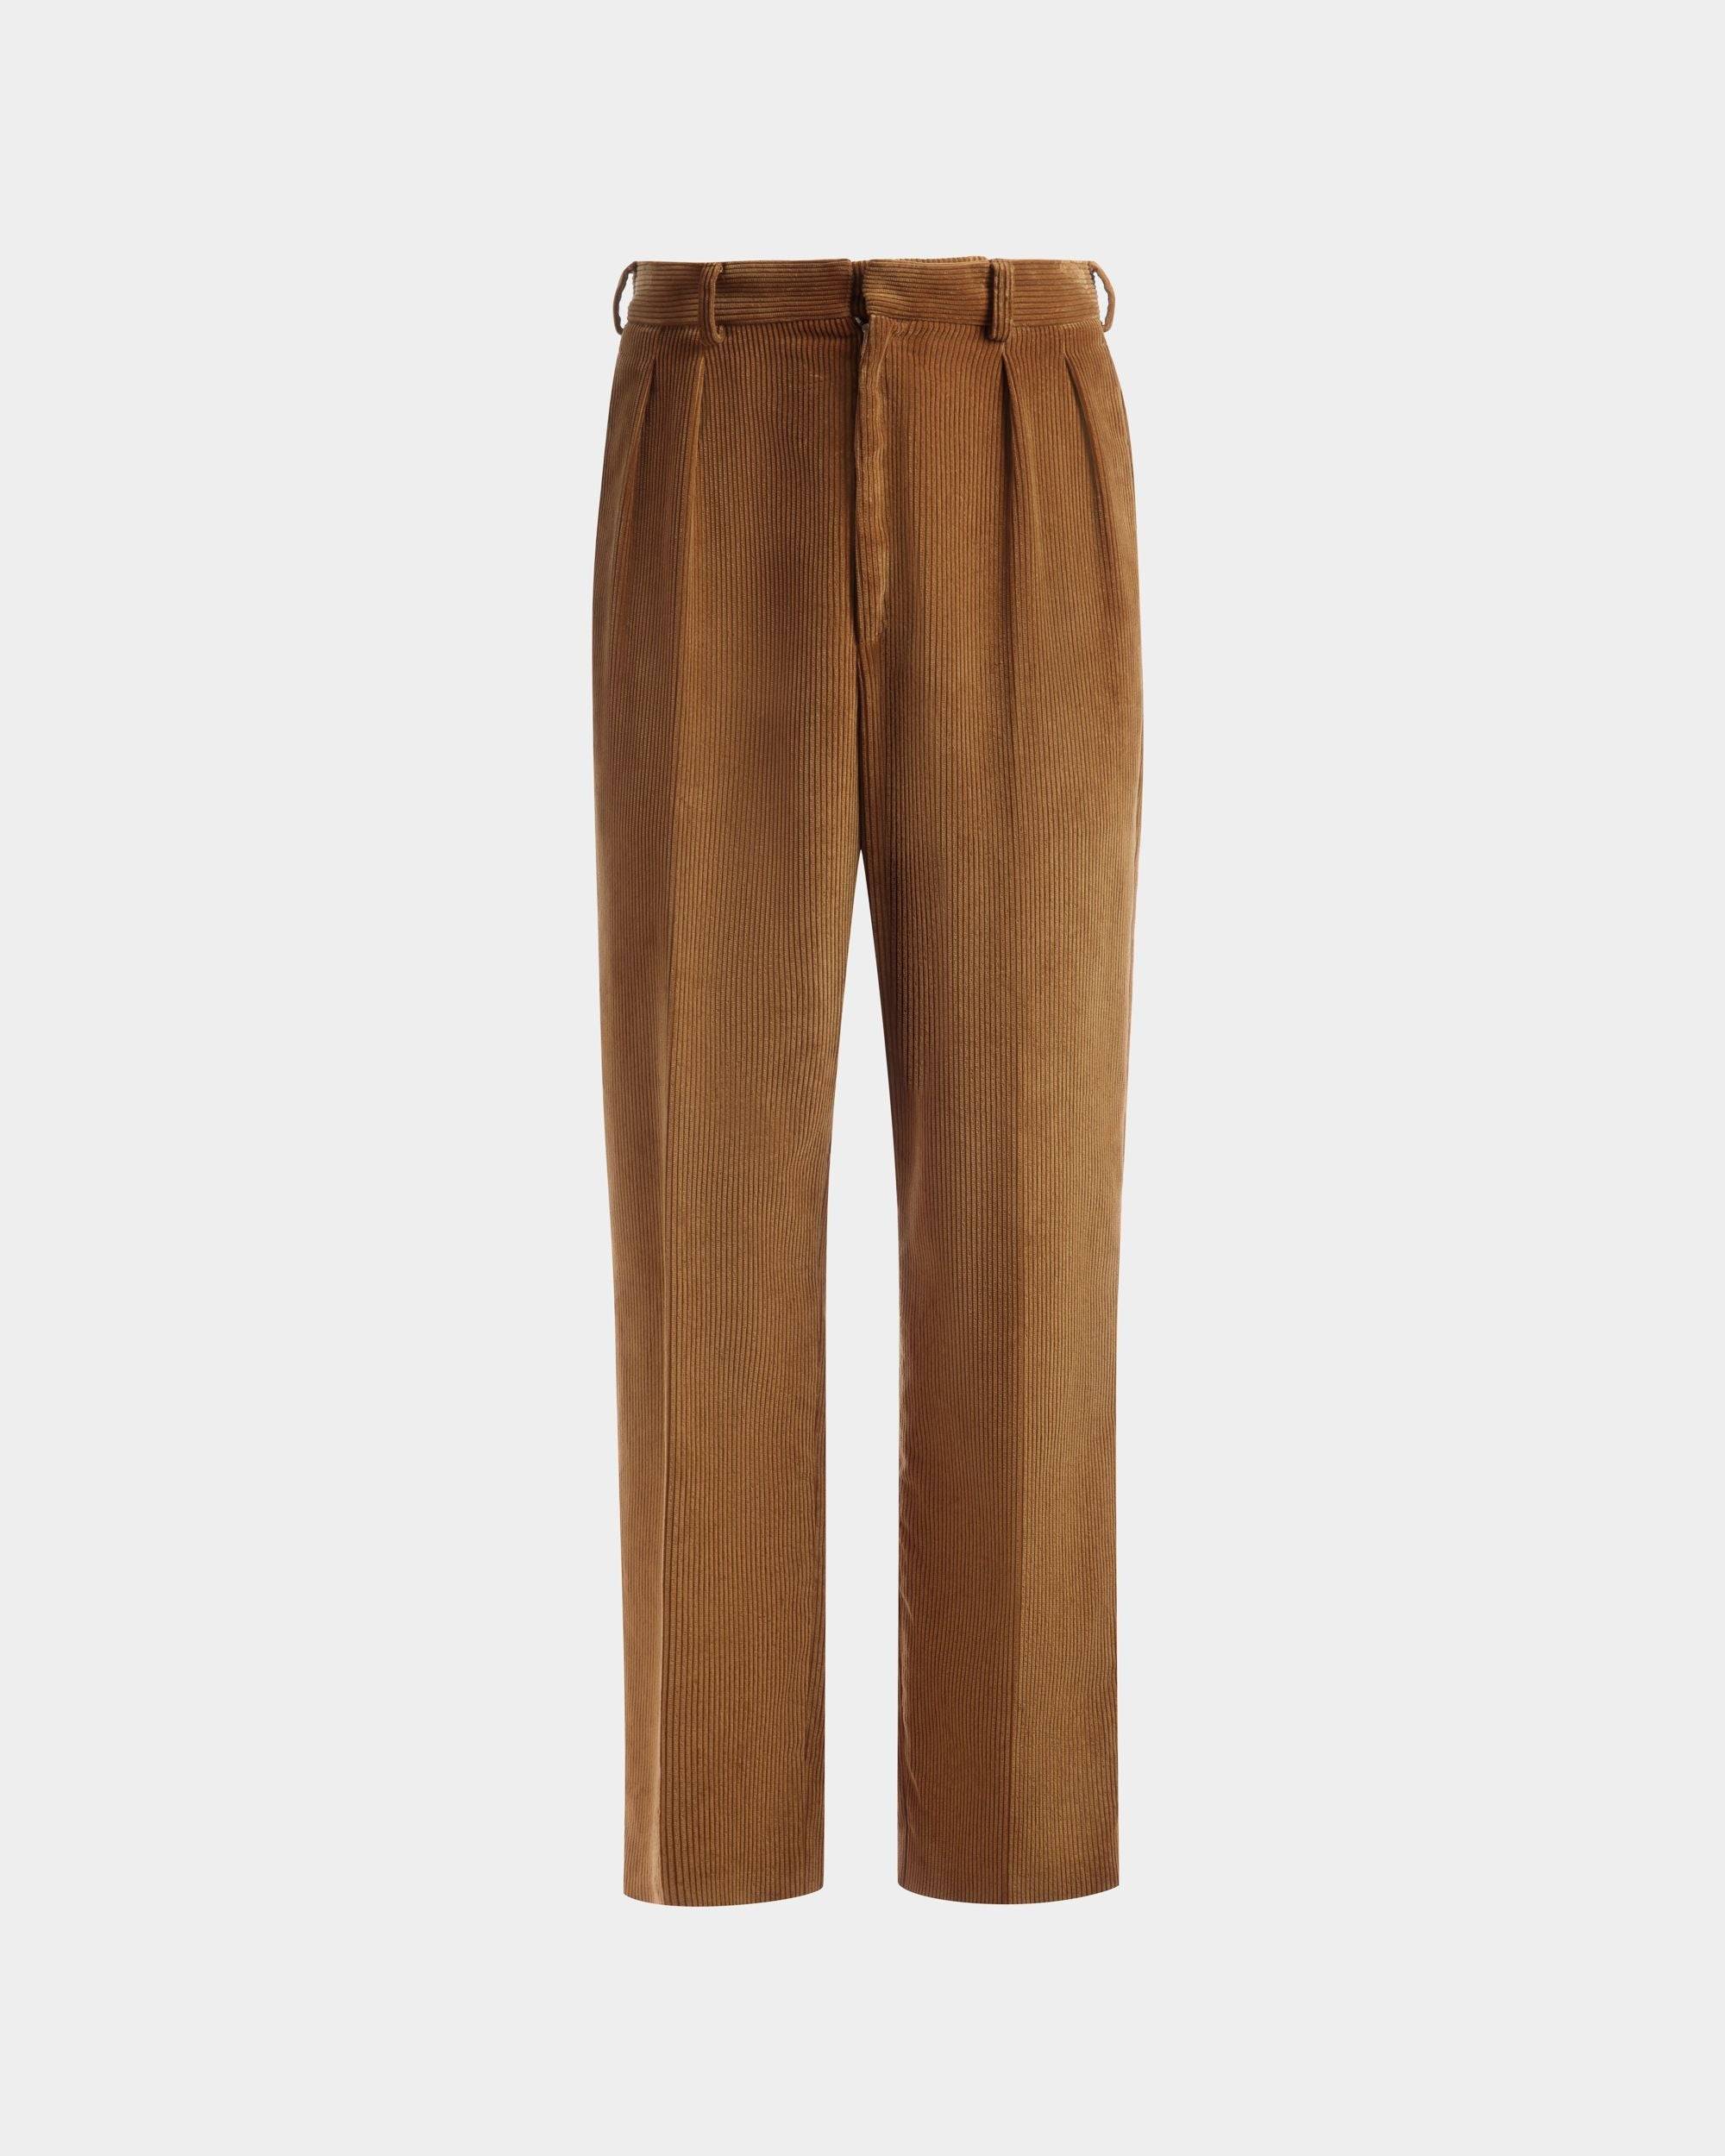 Corduroy Tailored Pants | Men's Pants | Camel Cotton | Bally | Still Life Front